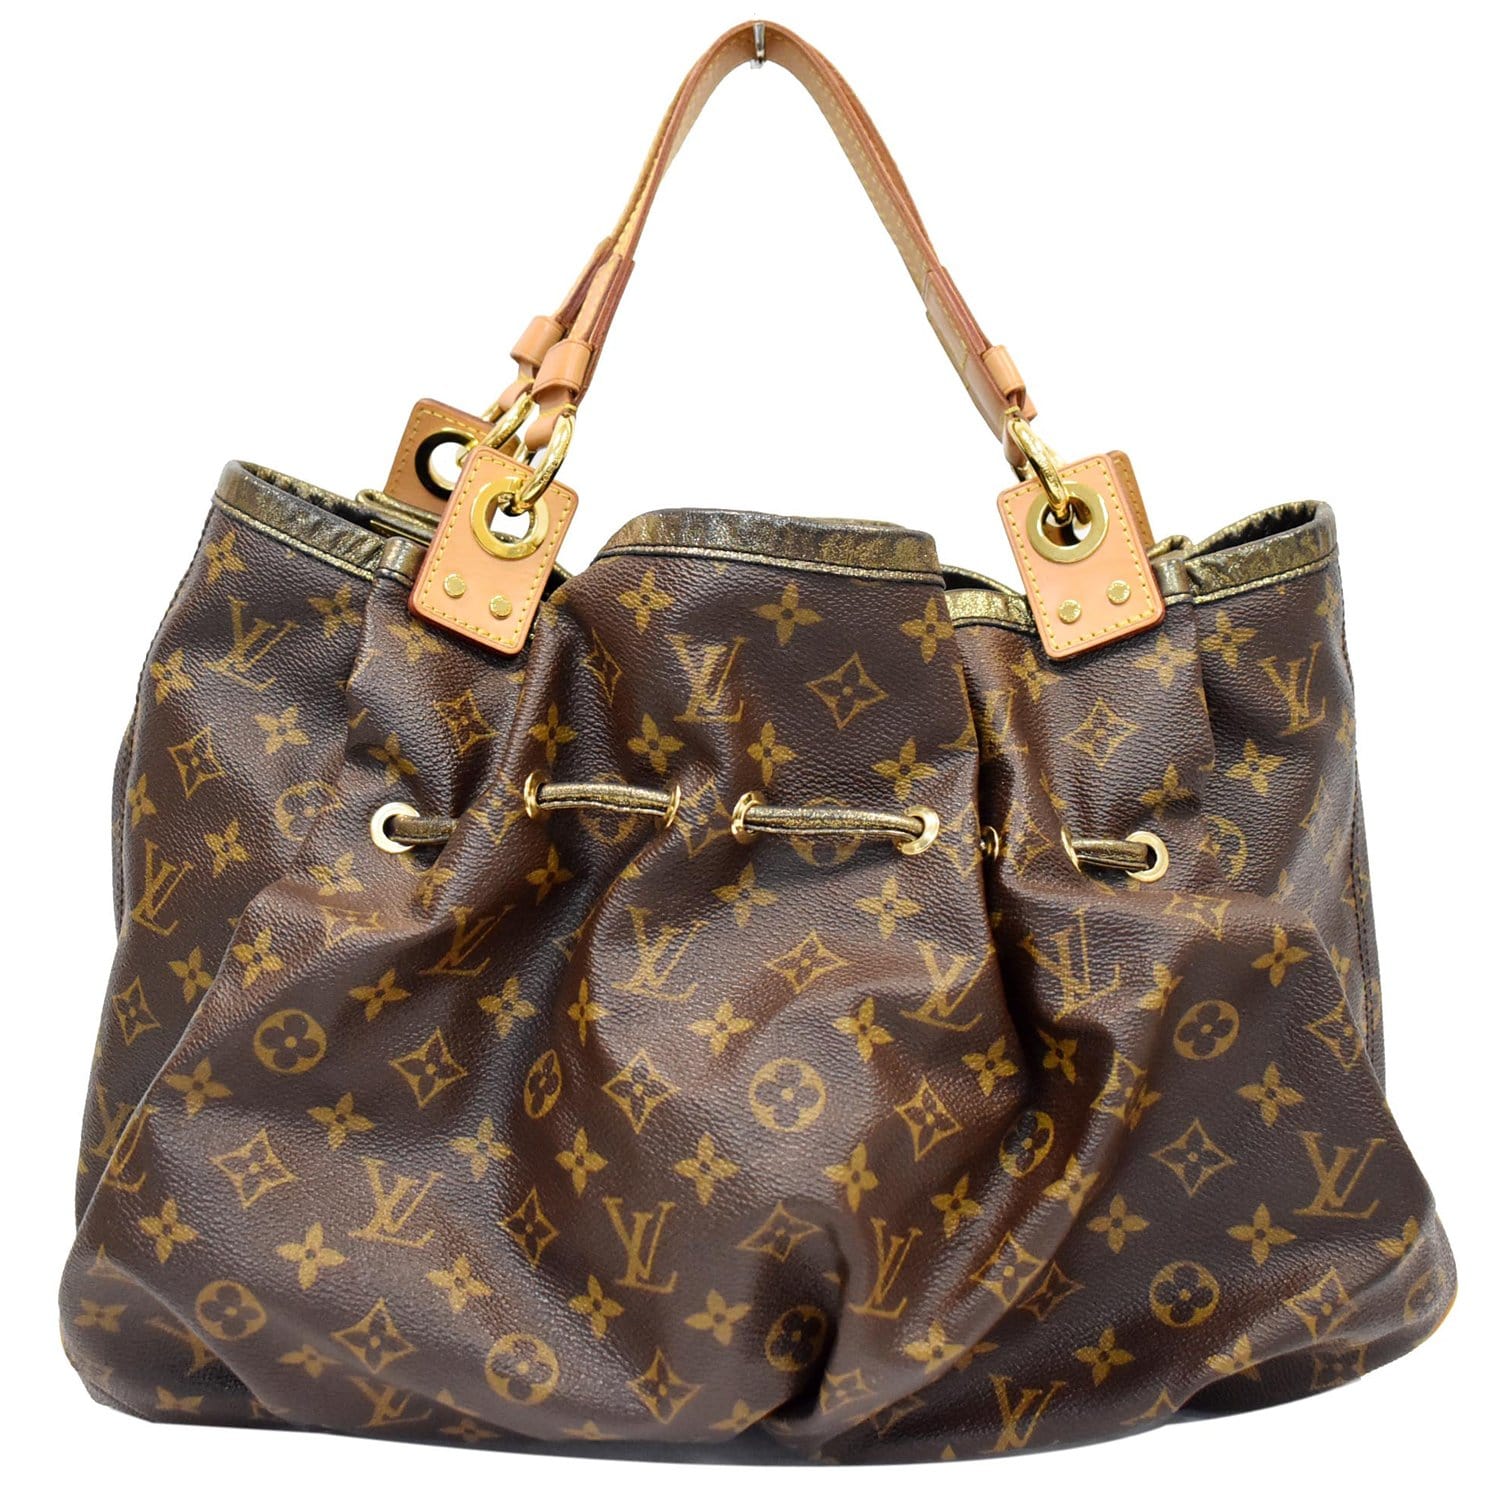 Louis Vuitton. Irene Monogram Bag. Auction